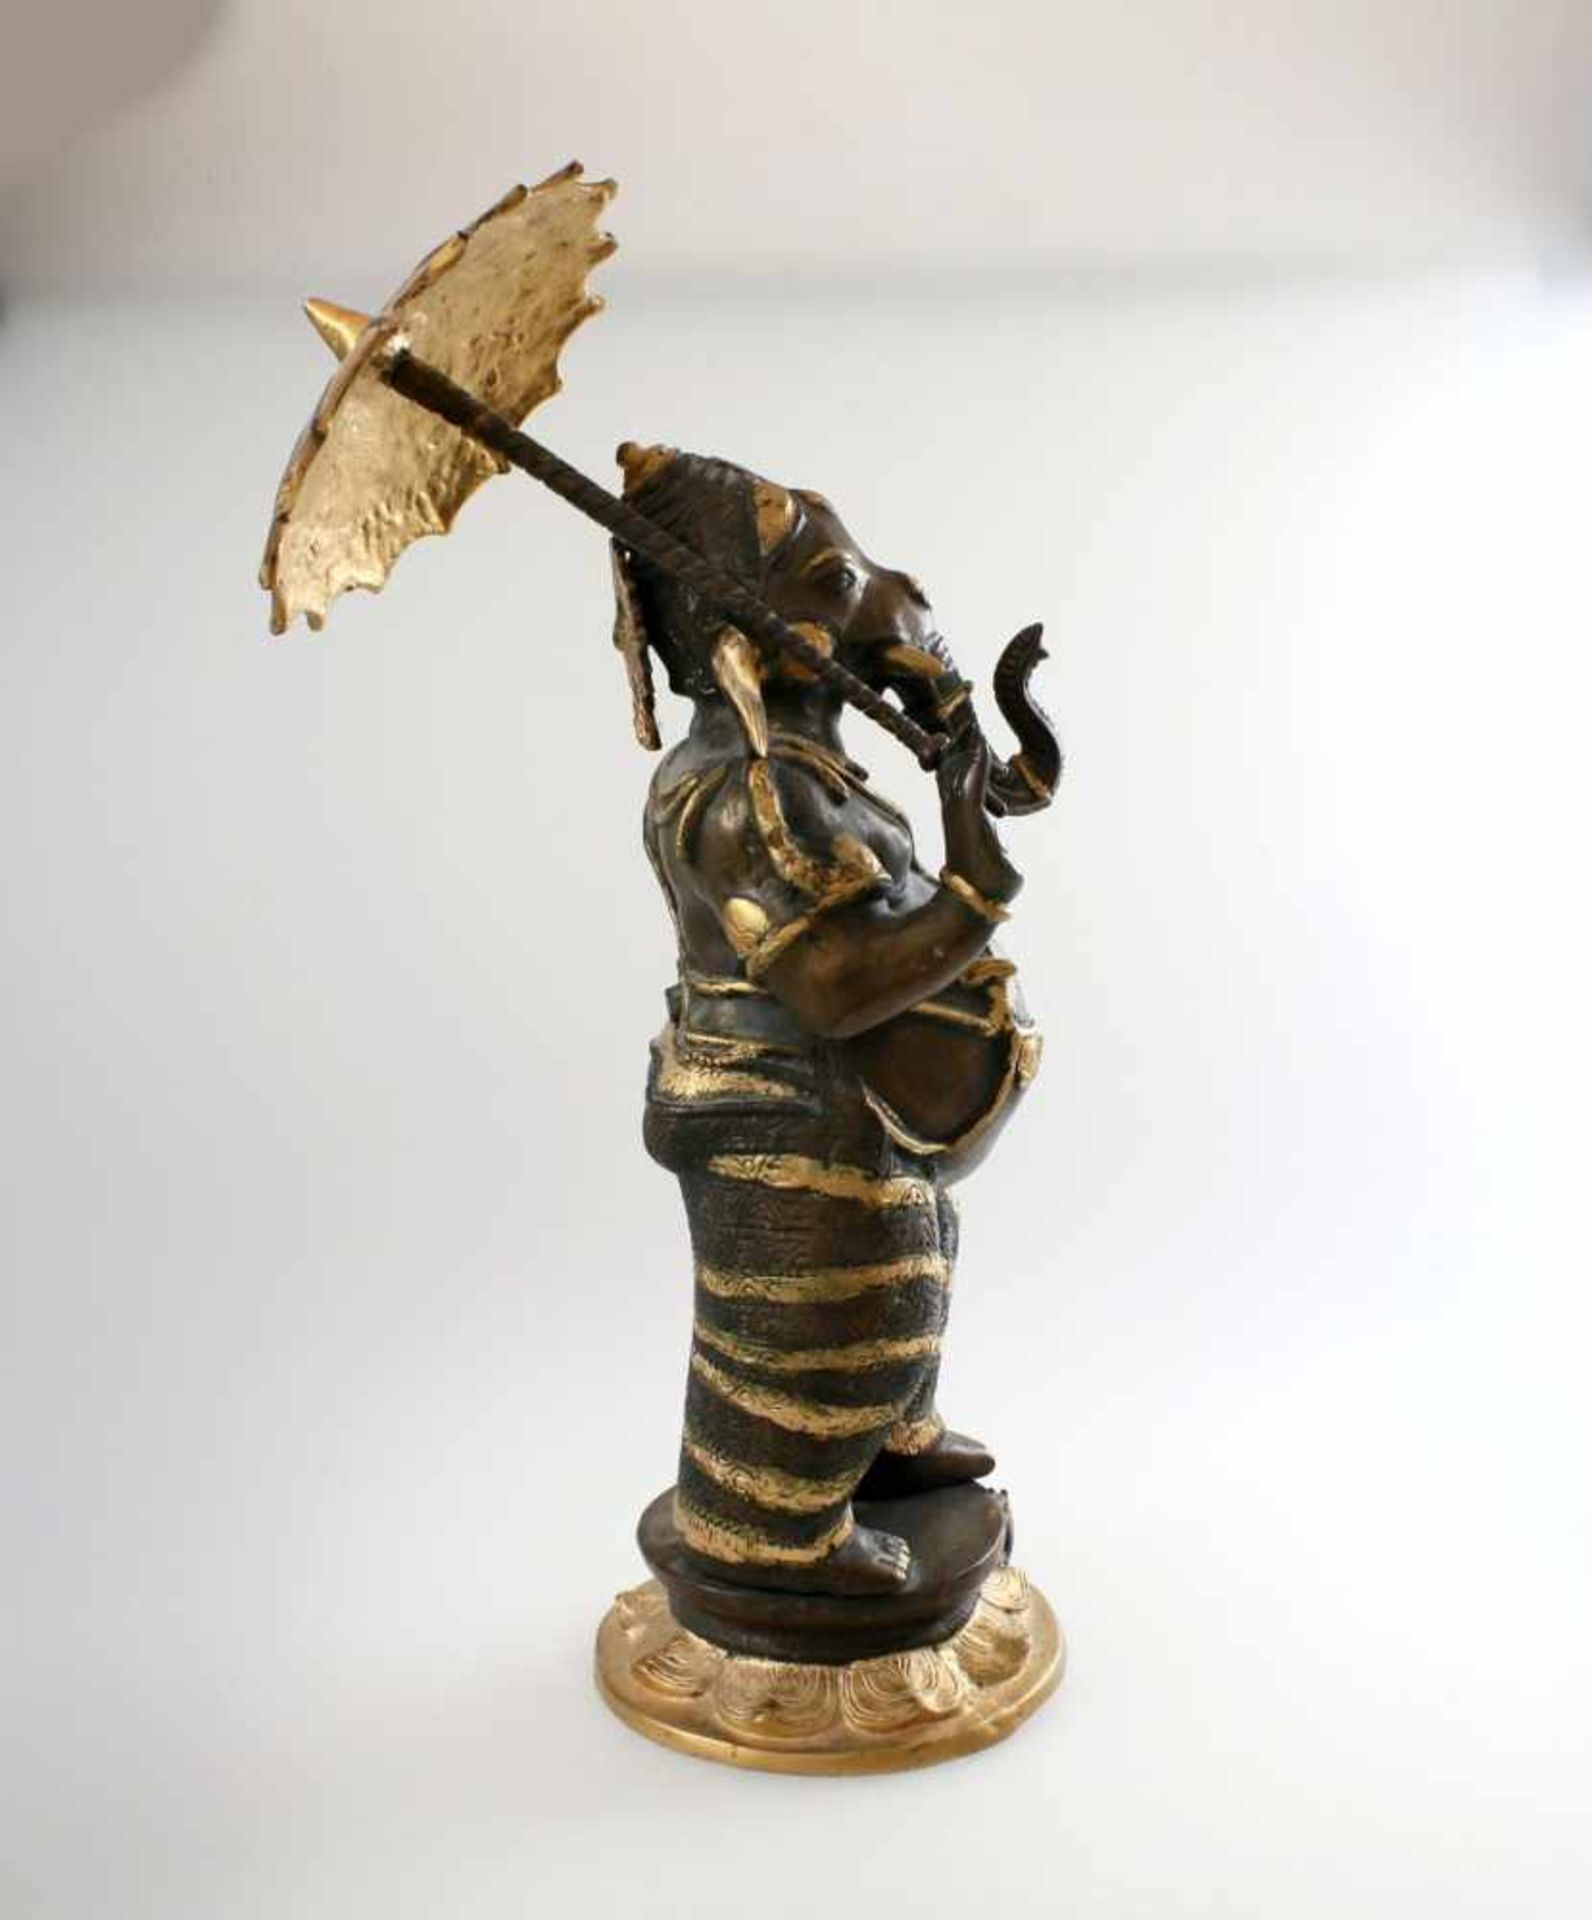 Ganesha mit Schirm - Nordindien In der rechten Schirm, in der linken Hand Teegefäß haltend, - Image 4 of 6